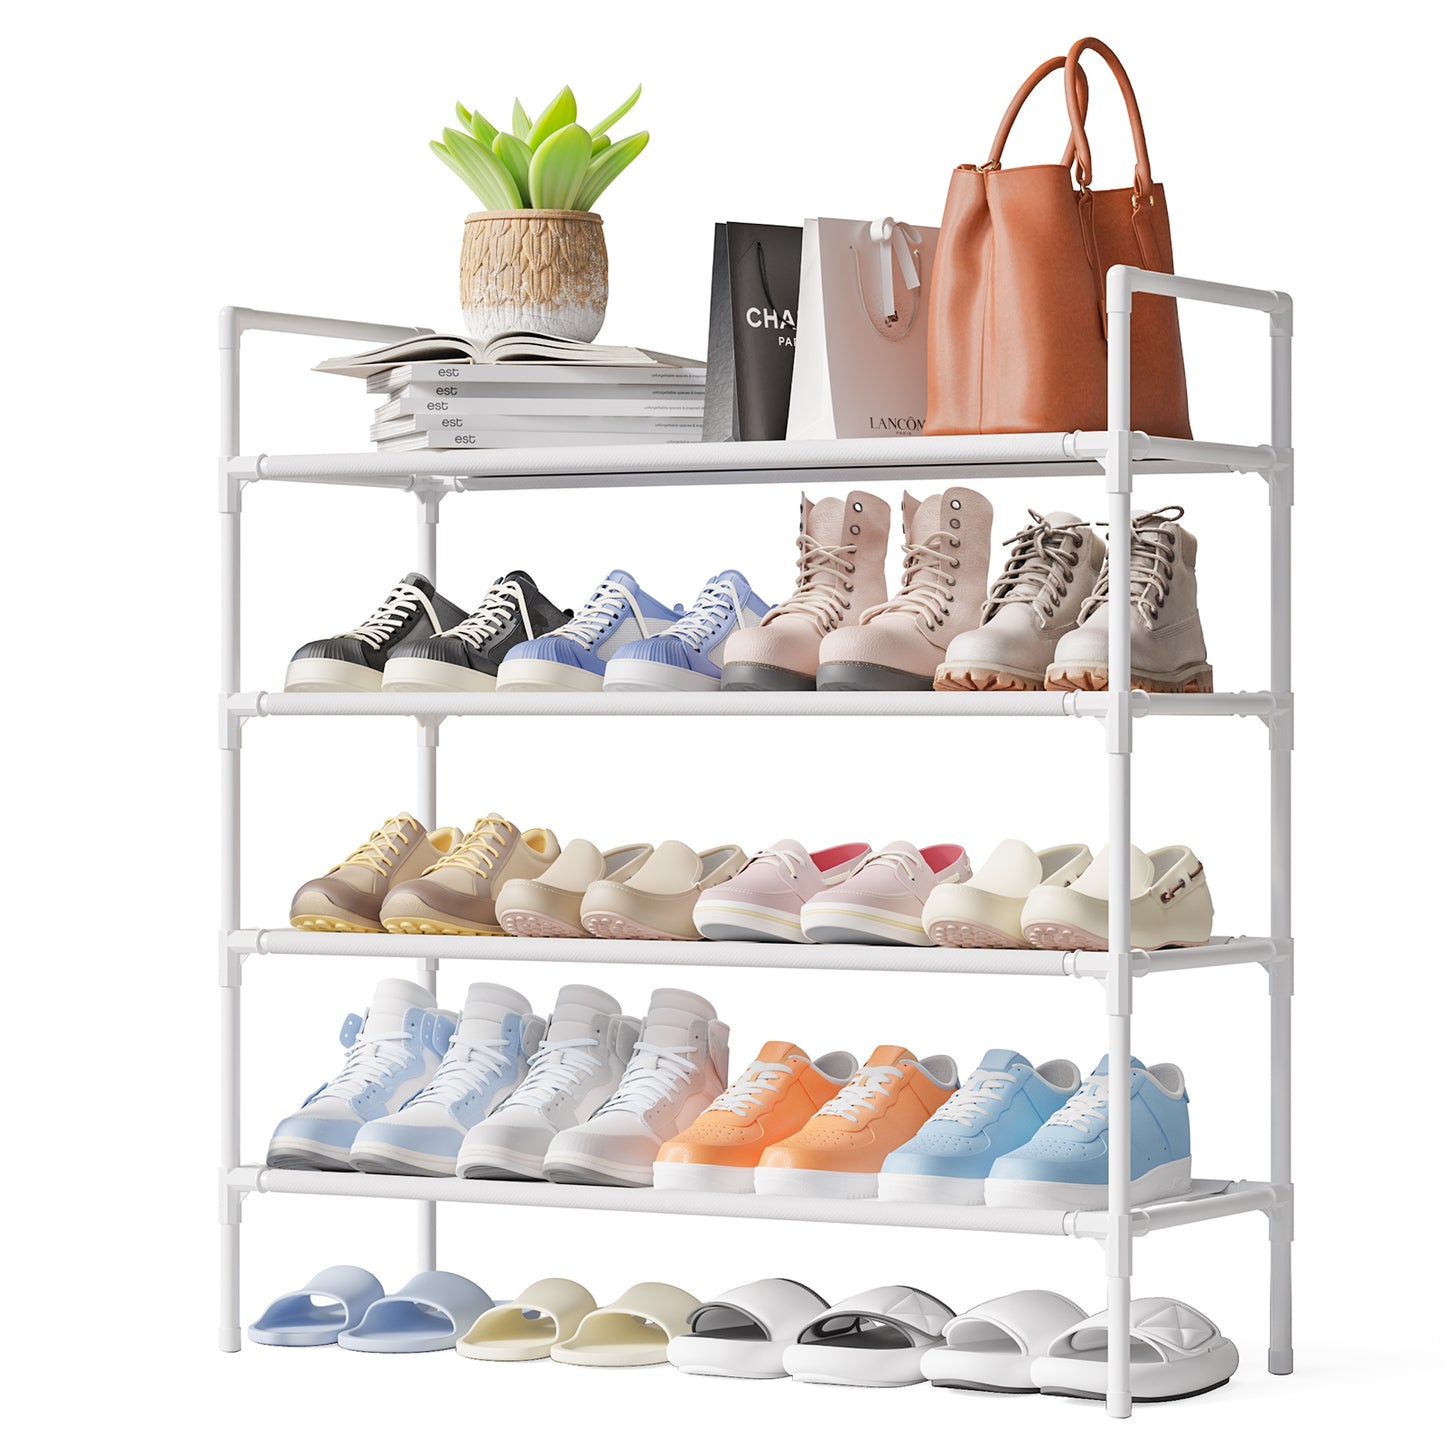 Sakugi Shoe Rack - X-Large Shoe Organizer, 3-Tier Shoe Storage Rack, Sturdy & Durable Shoe Rack for Closet, Garage & Corridor, Stackable Shoe Rack for Entryway, Up to 16 Pairs of Shoes, Black